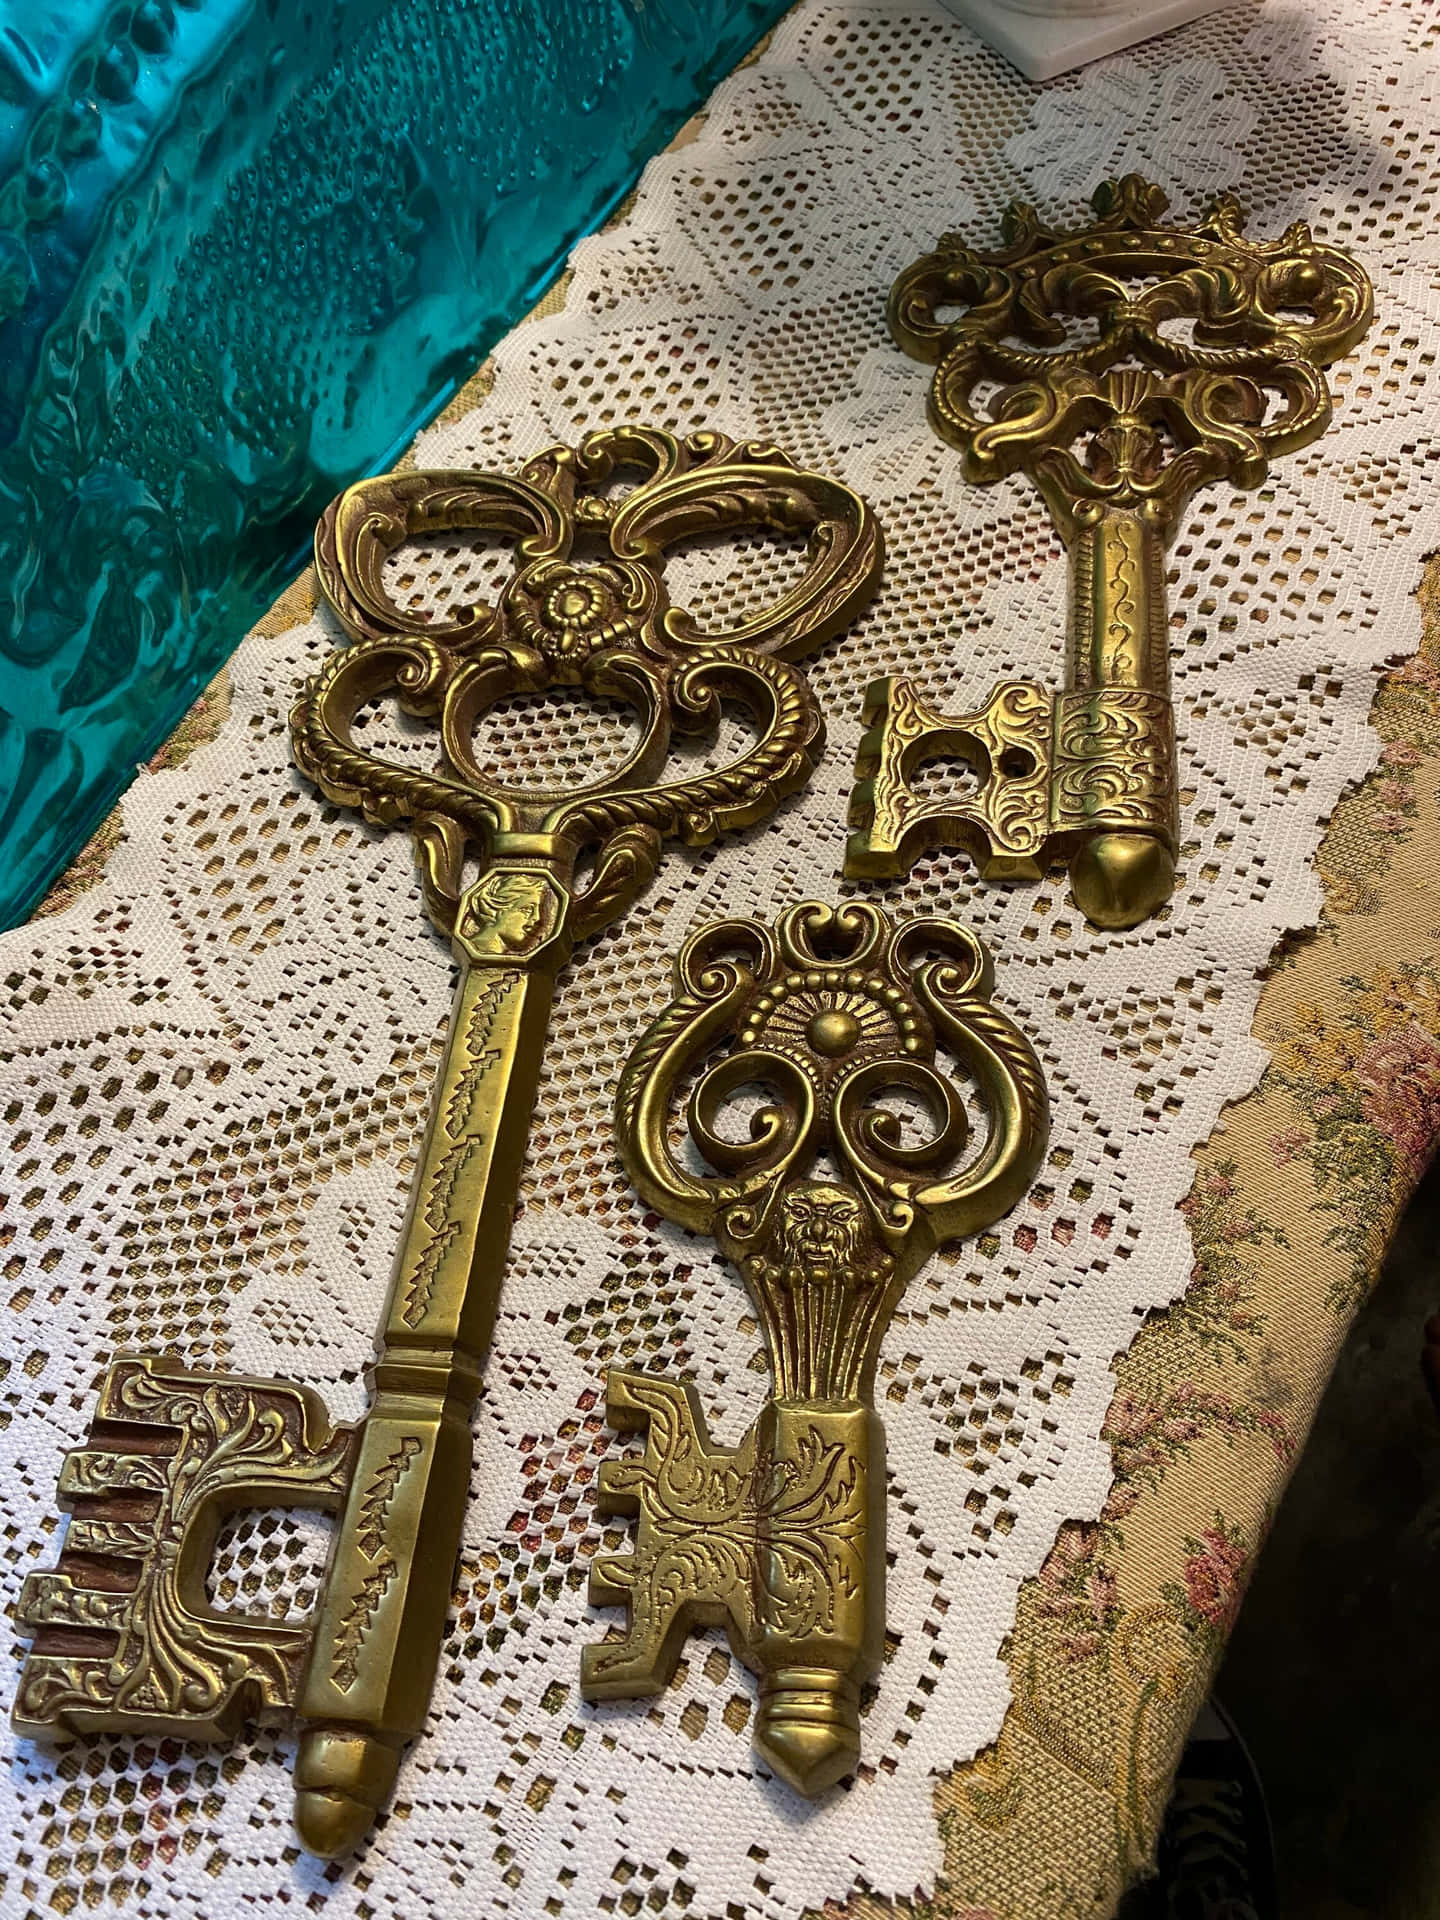 Three Gold Keys On A Table